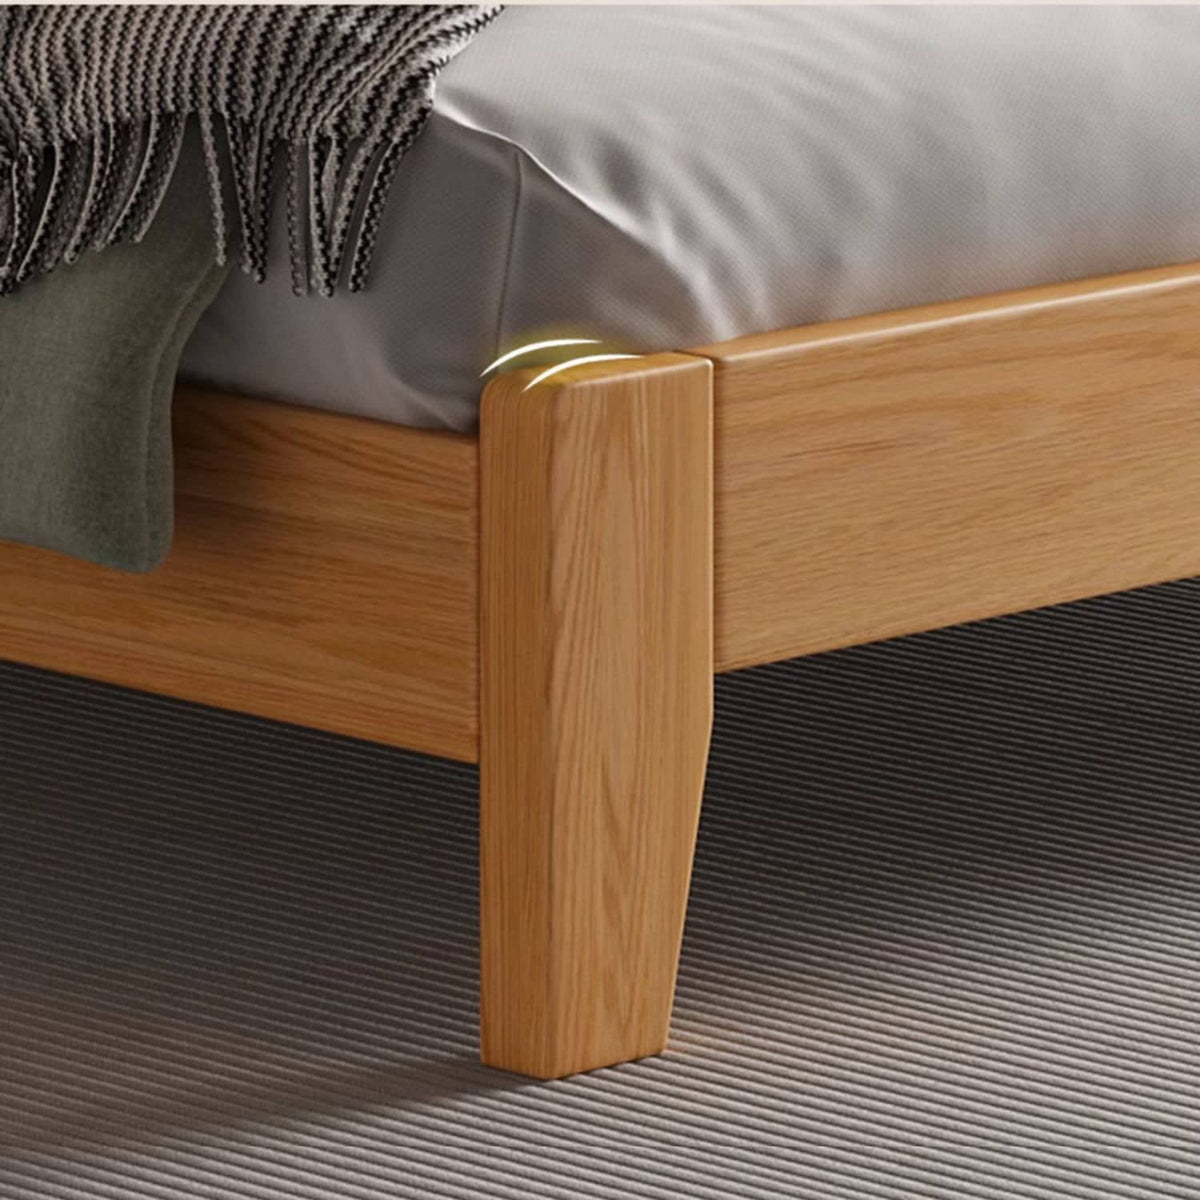 Premium Natural Rubber Wood Pine Bed - Cozy Flannel Finish hmak-239